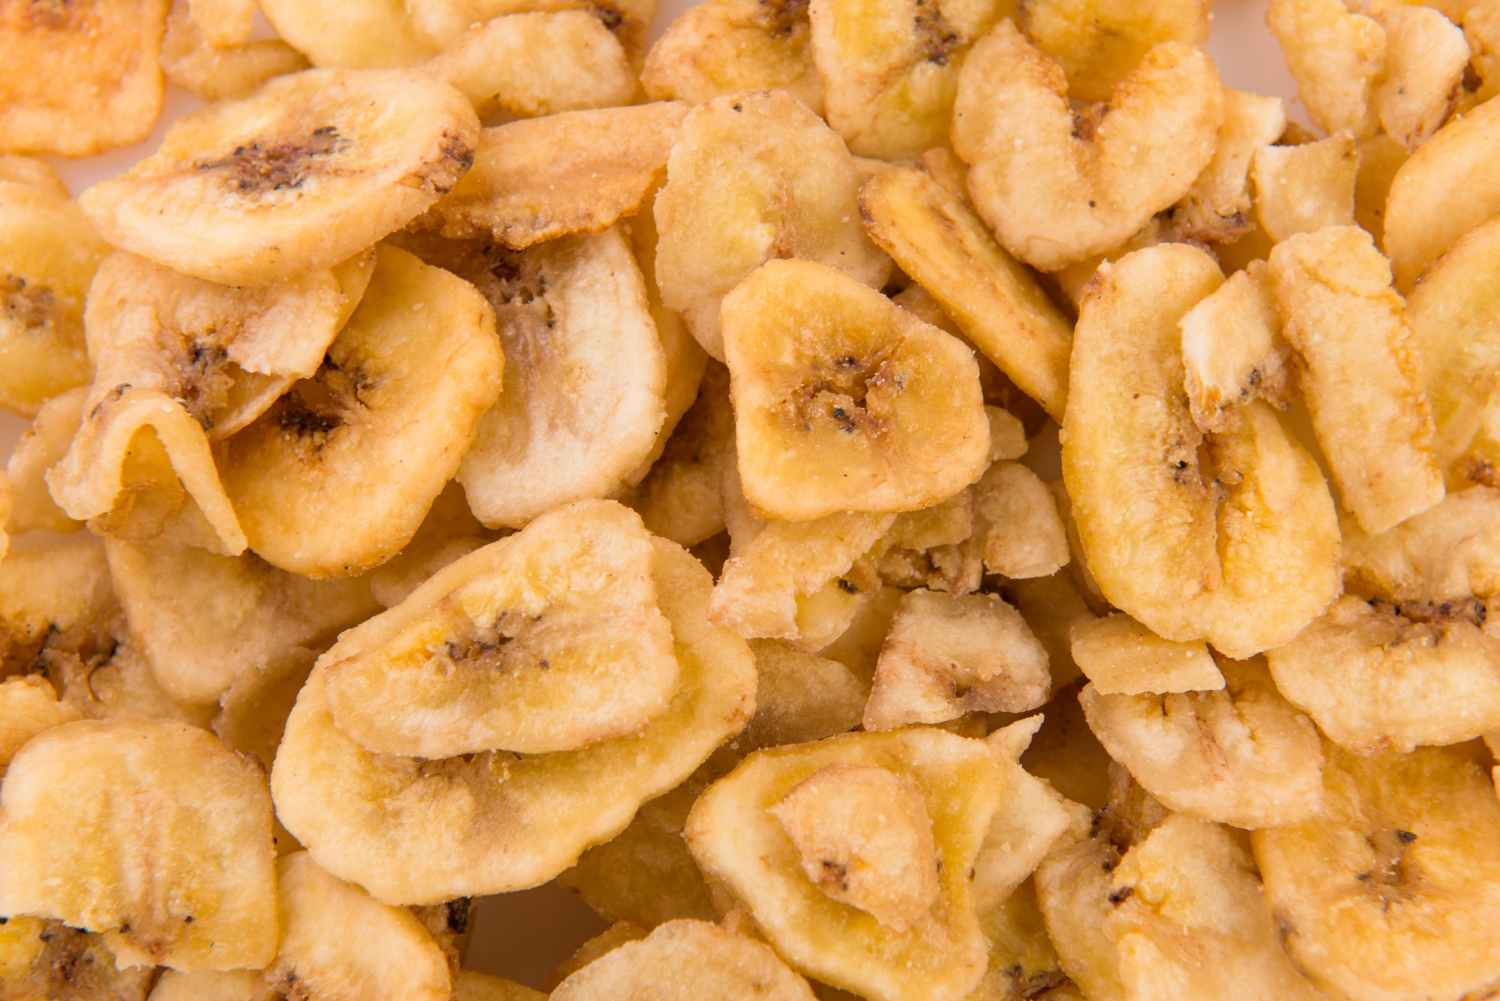  Como fazer chips de banana da terra crocantes e saudáveis